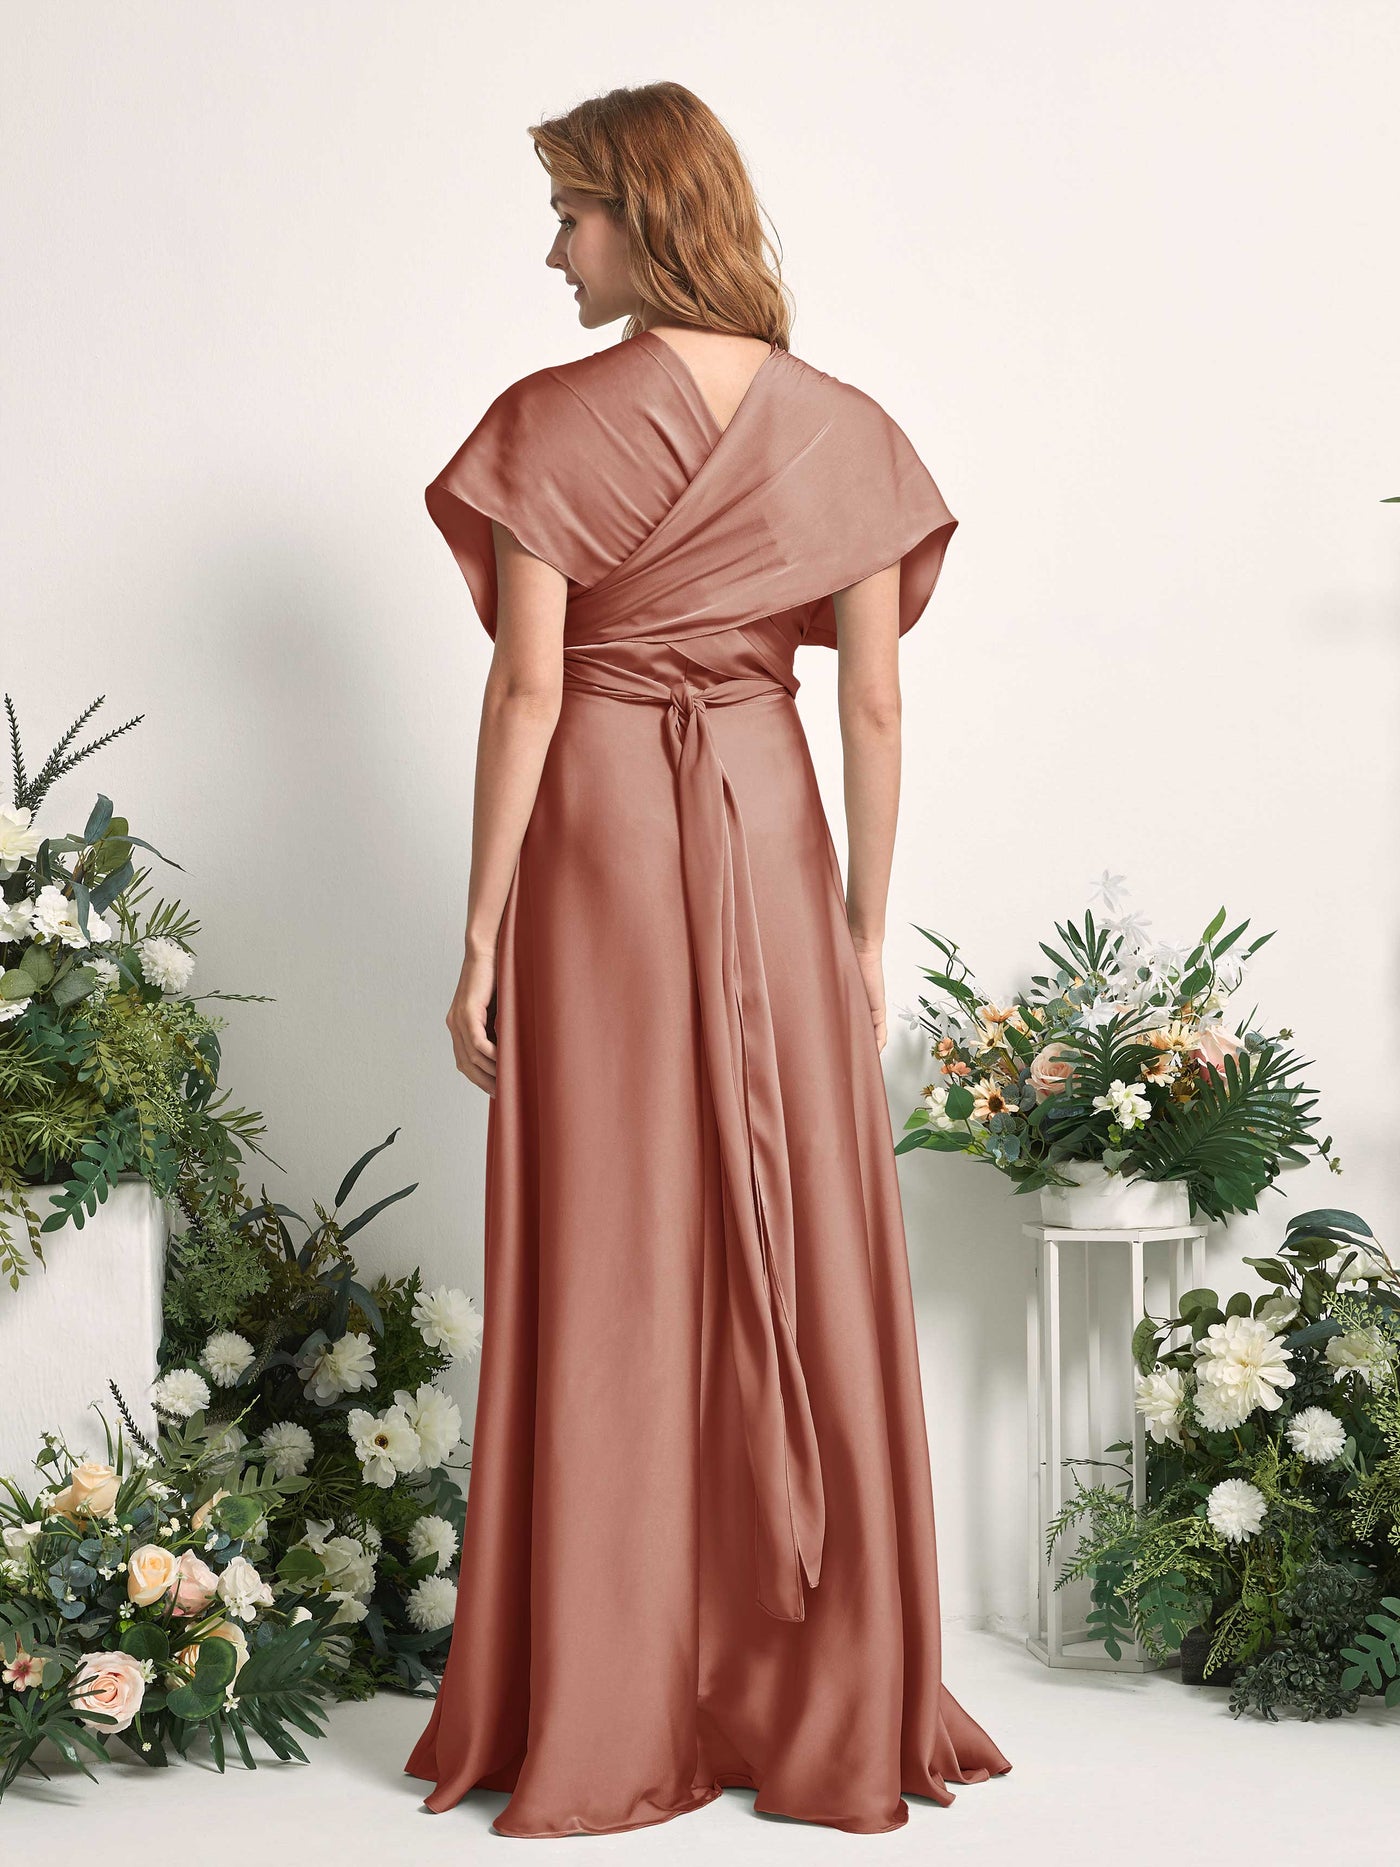 Raw Sienna Bridesmaid Dresses Bridesmaid Dress A-line Satin Halter Full Length Short Sleeves Wedding Party Dress (81226415)#color_raw-sienna